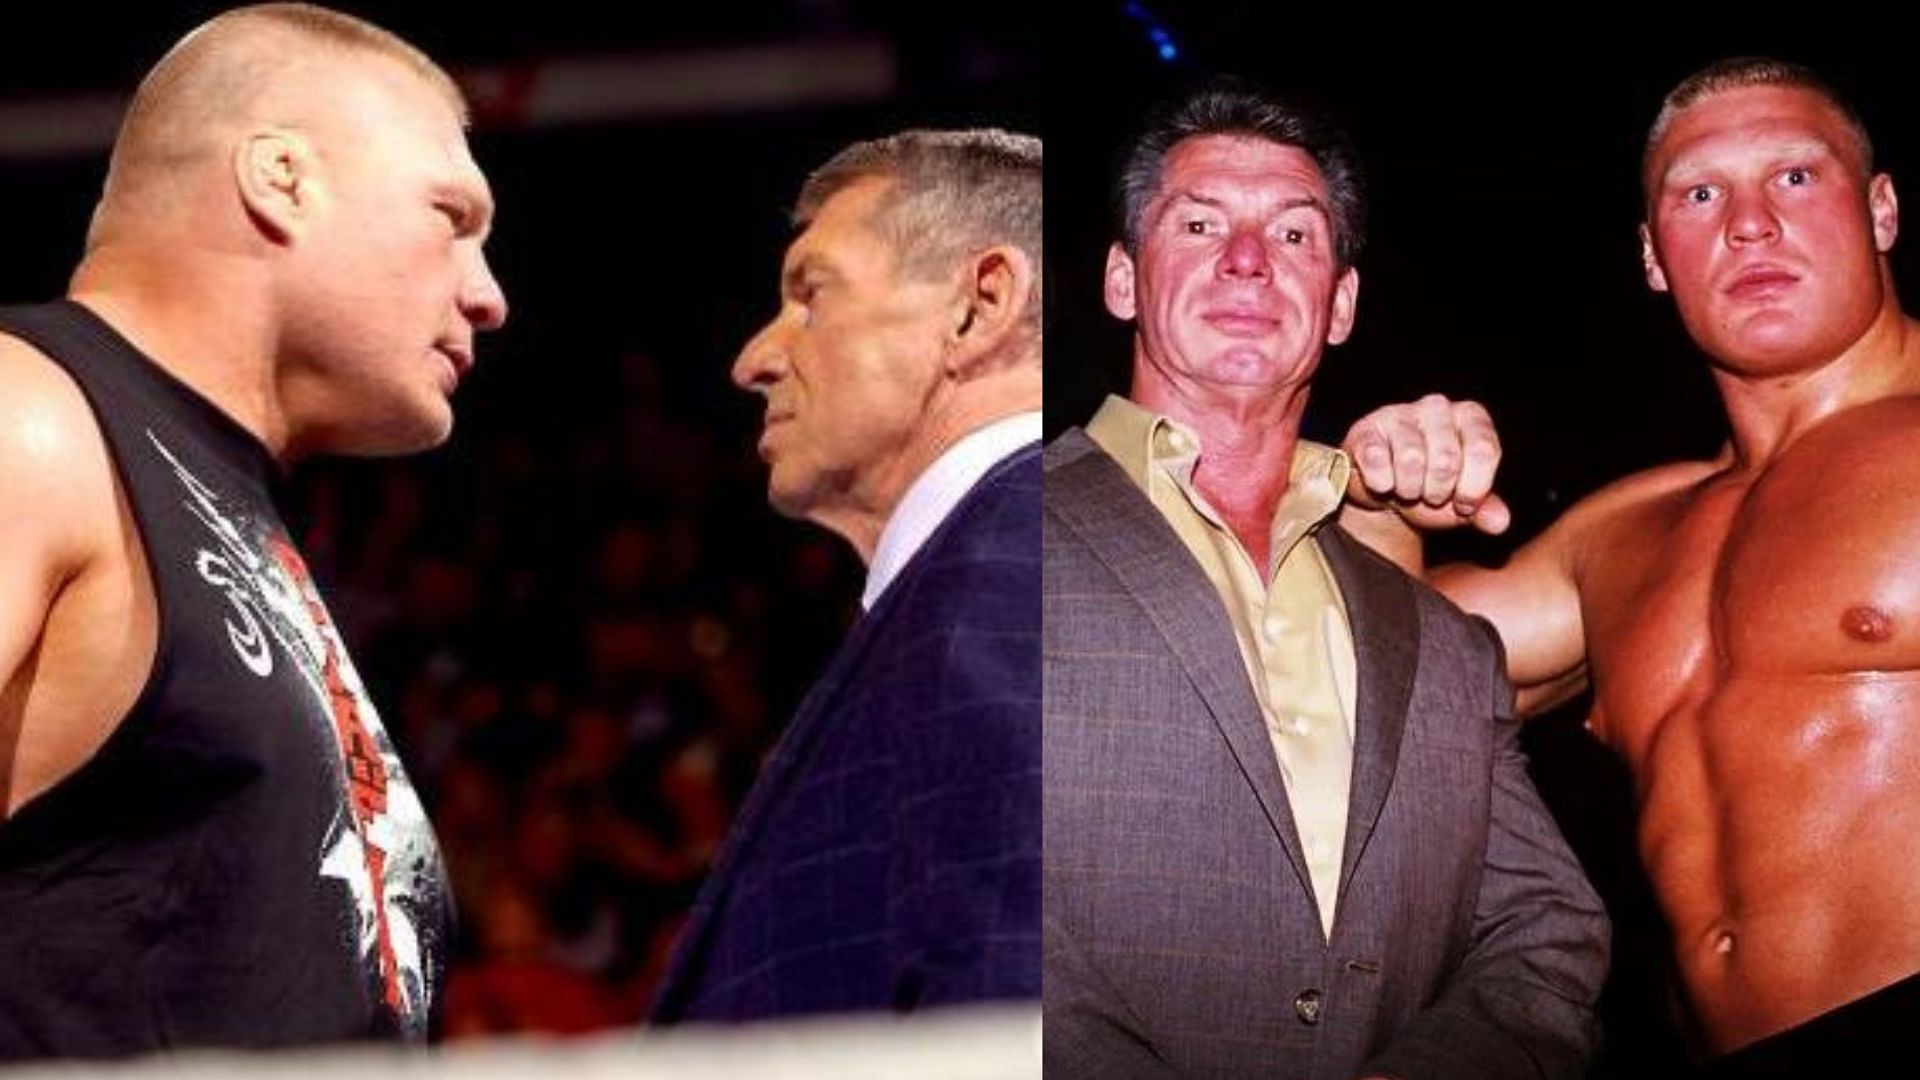 WWE personalities Vince McMahon and Brock Lesnar